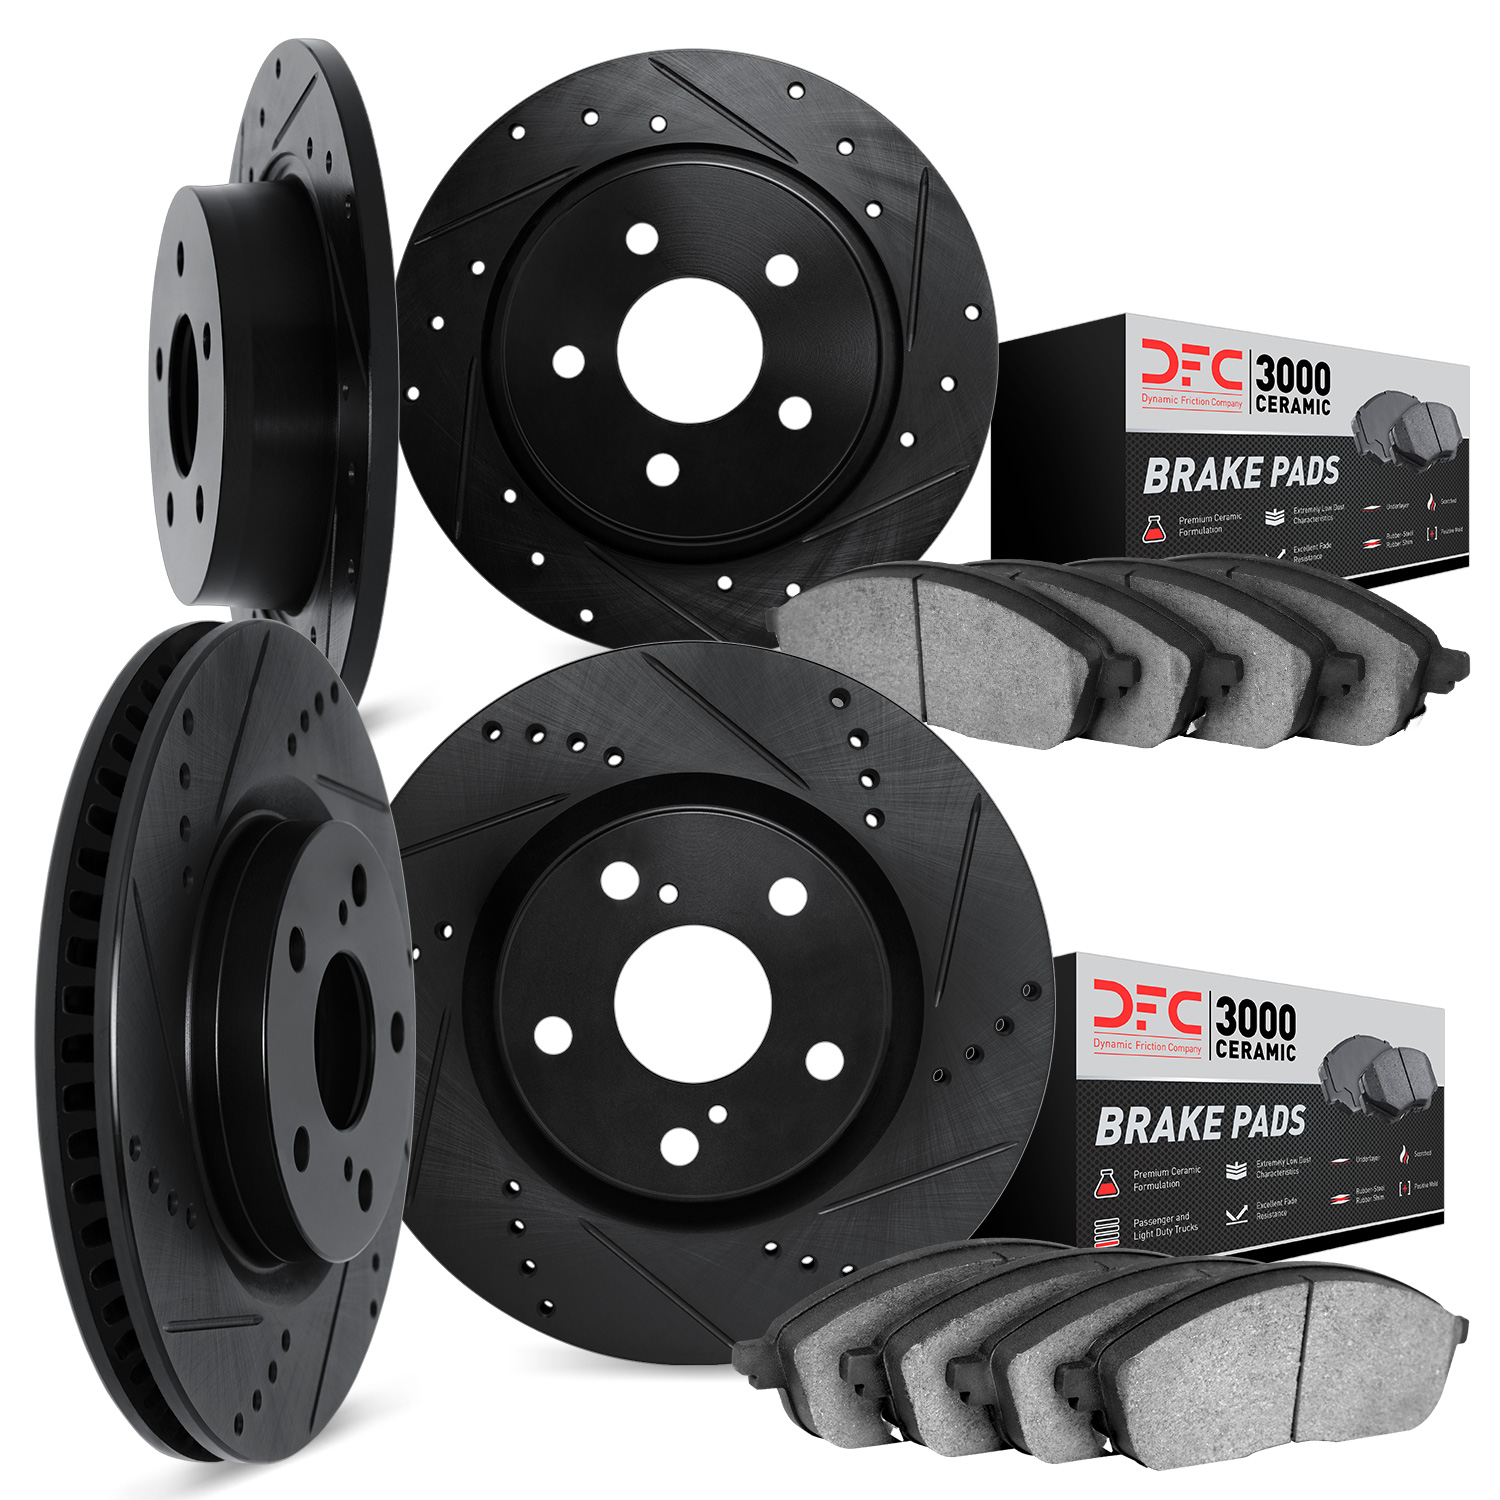 8304-80040 Drilled/Slotted Brake Rotors with 3000-Series Ceramic Brake Pads Kit [Black], 2014-2016 Ford/Lincoln/Mercury/Mazda, P